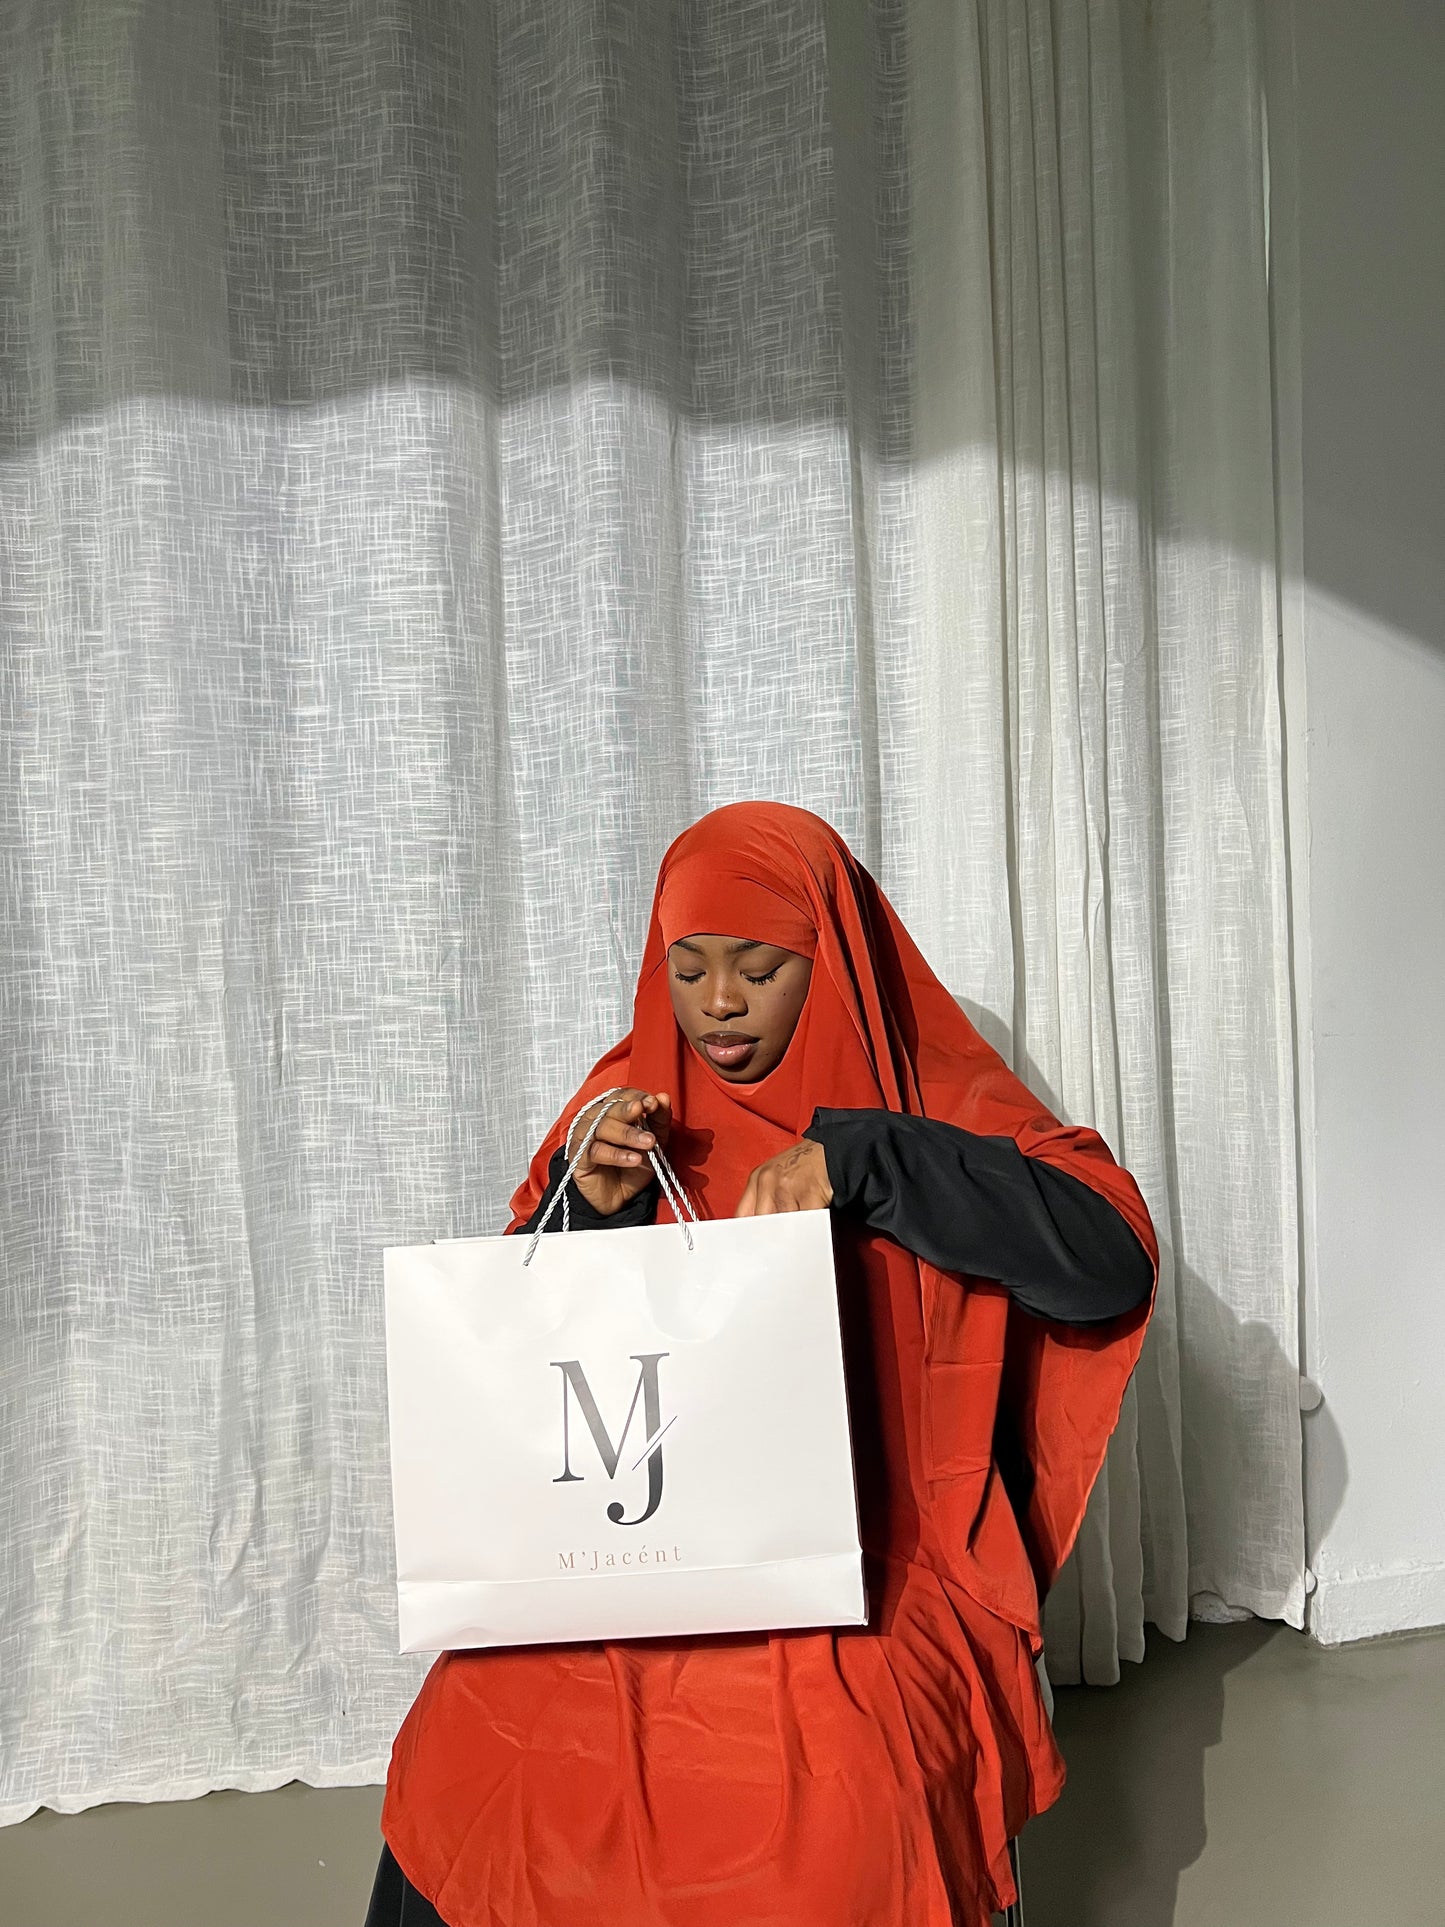 Burnt Orange Diamond Khimar Hijab